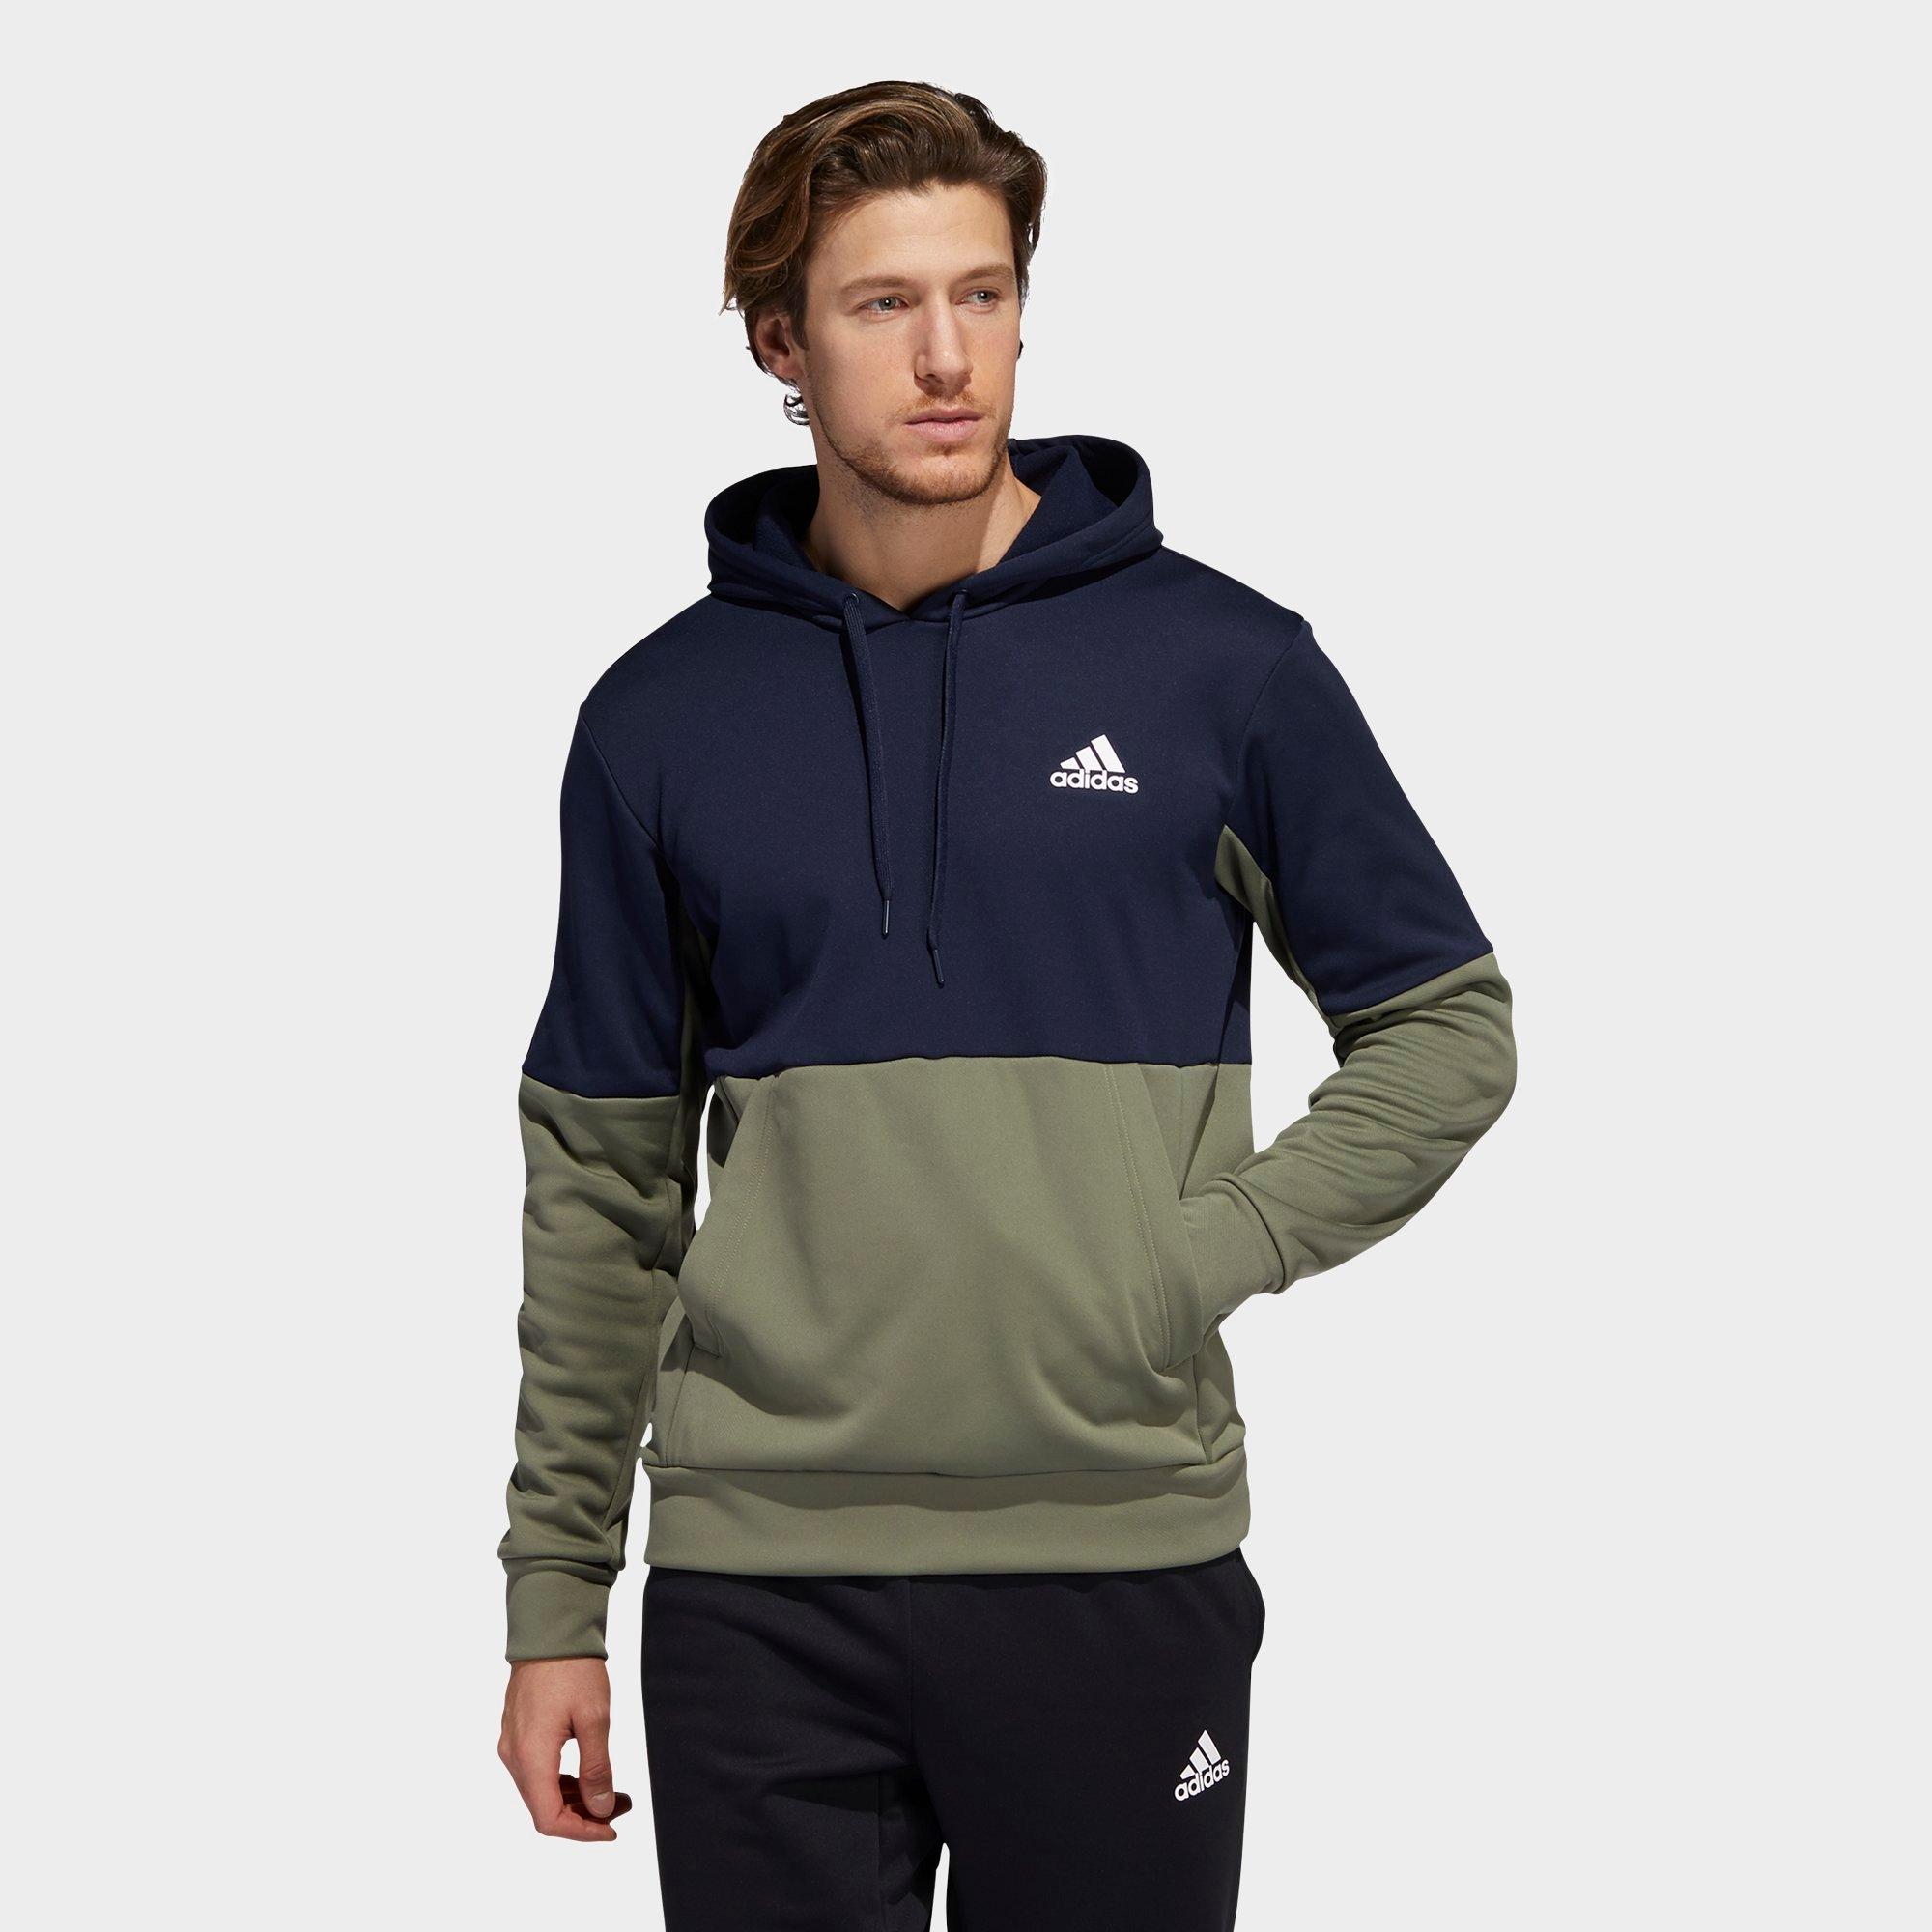 adidas team issue hoodie men's